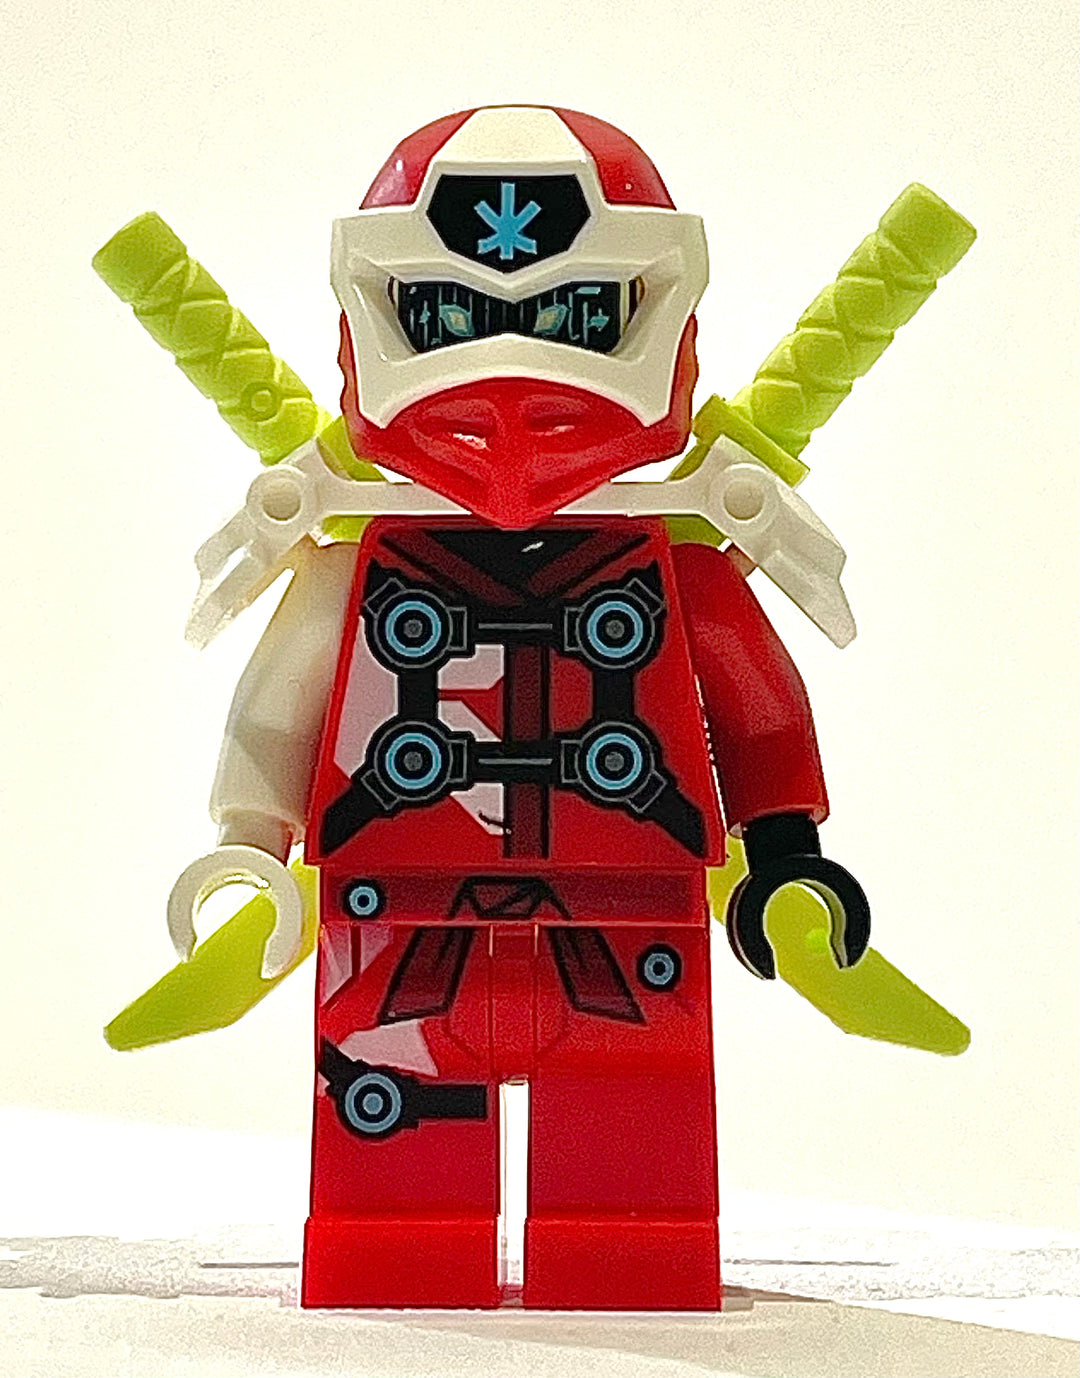 Kai - Digi Kai, Shoulder Armor with Scabbard, njo568 Minifigure LEGO® Like New - With Swords  